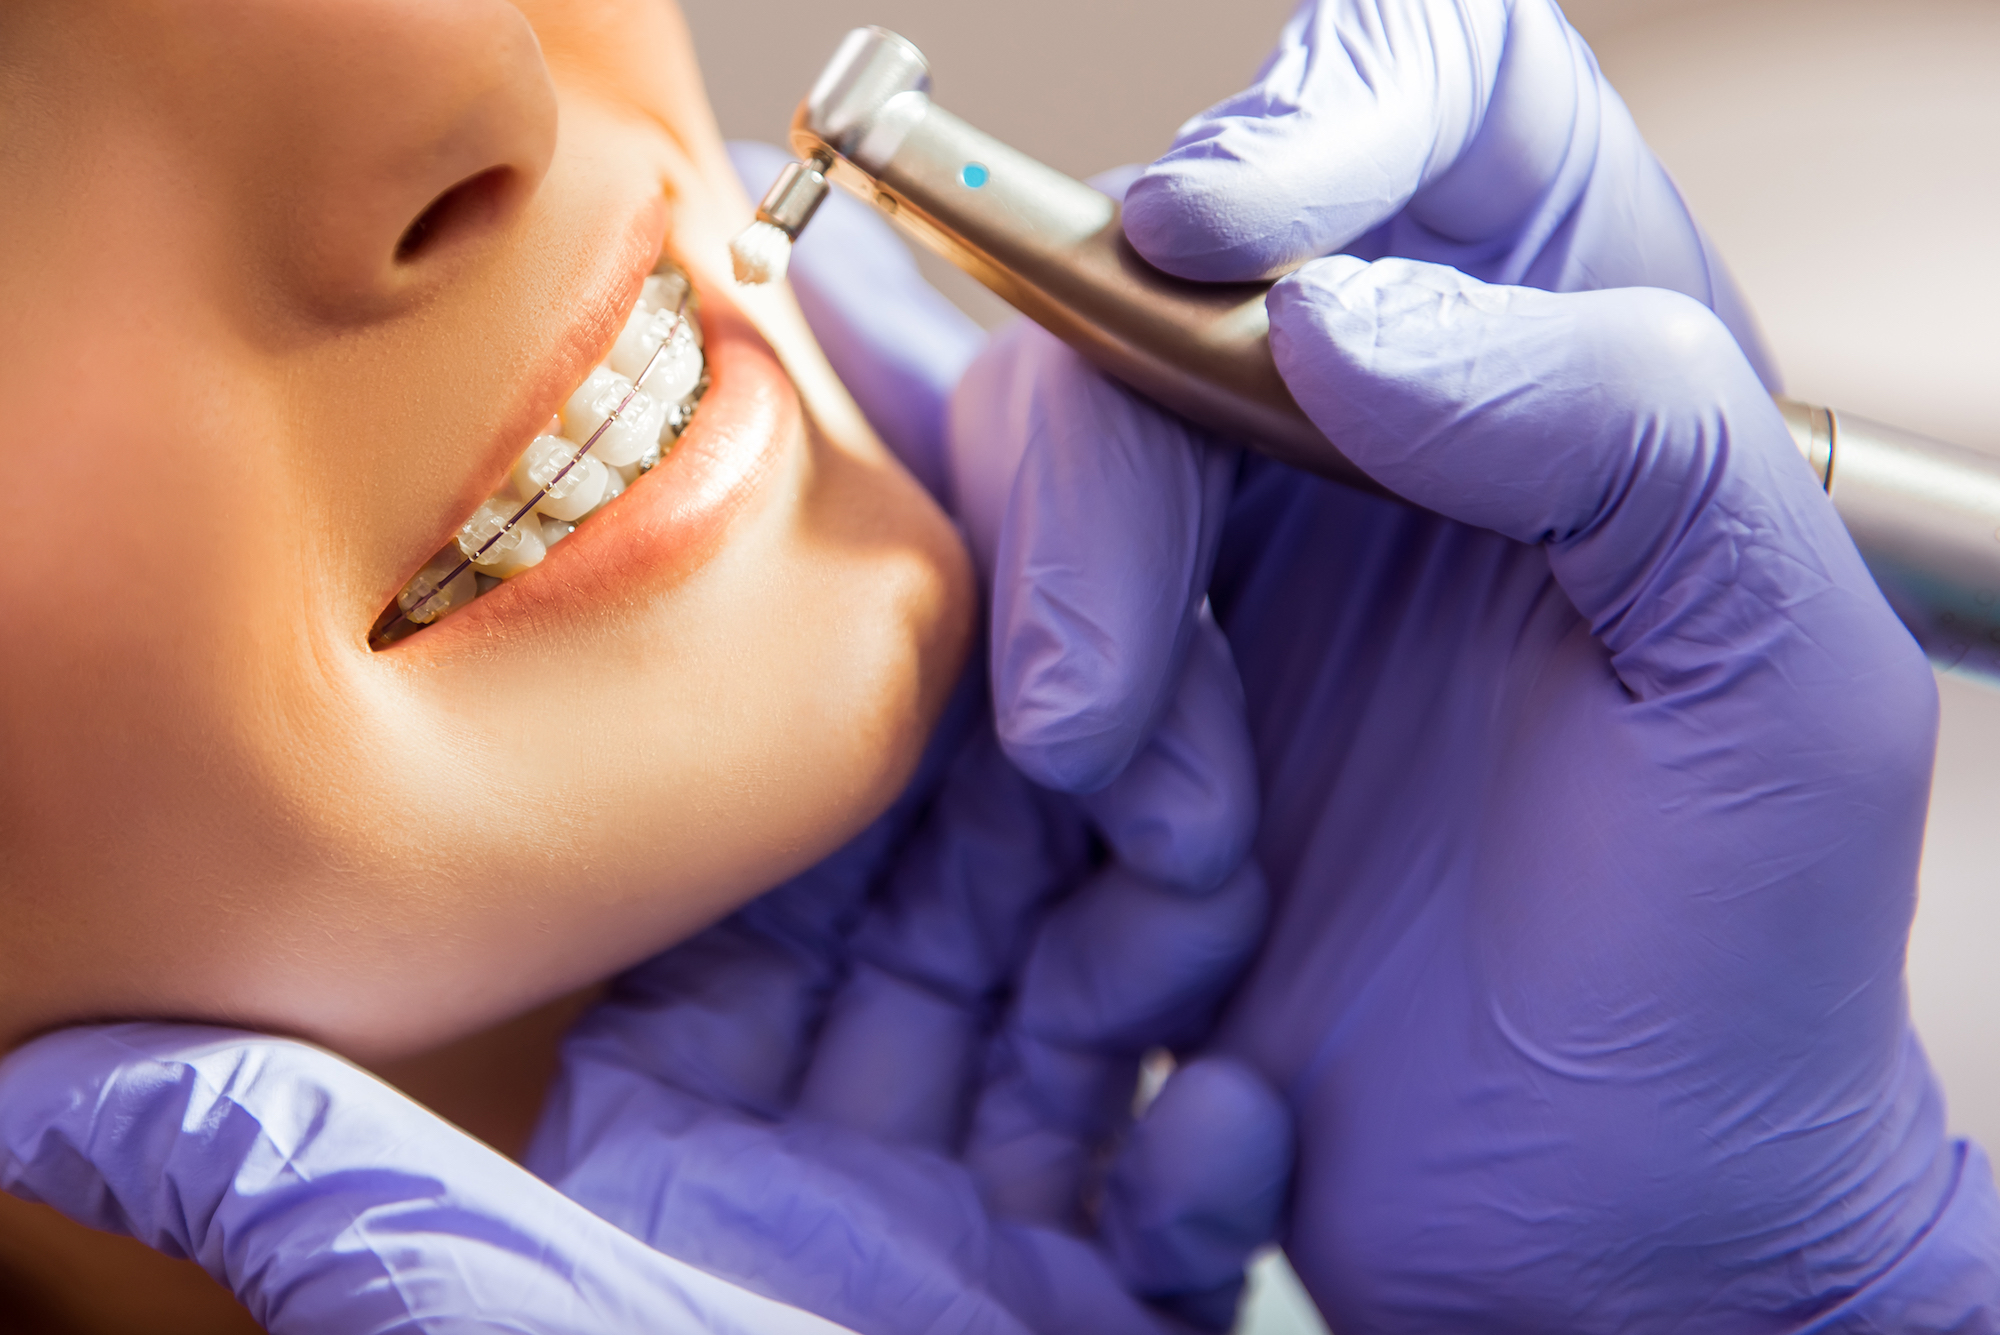 orthodontics treatment